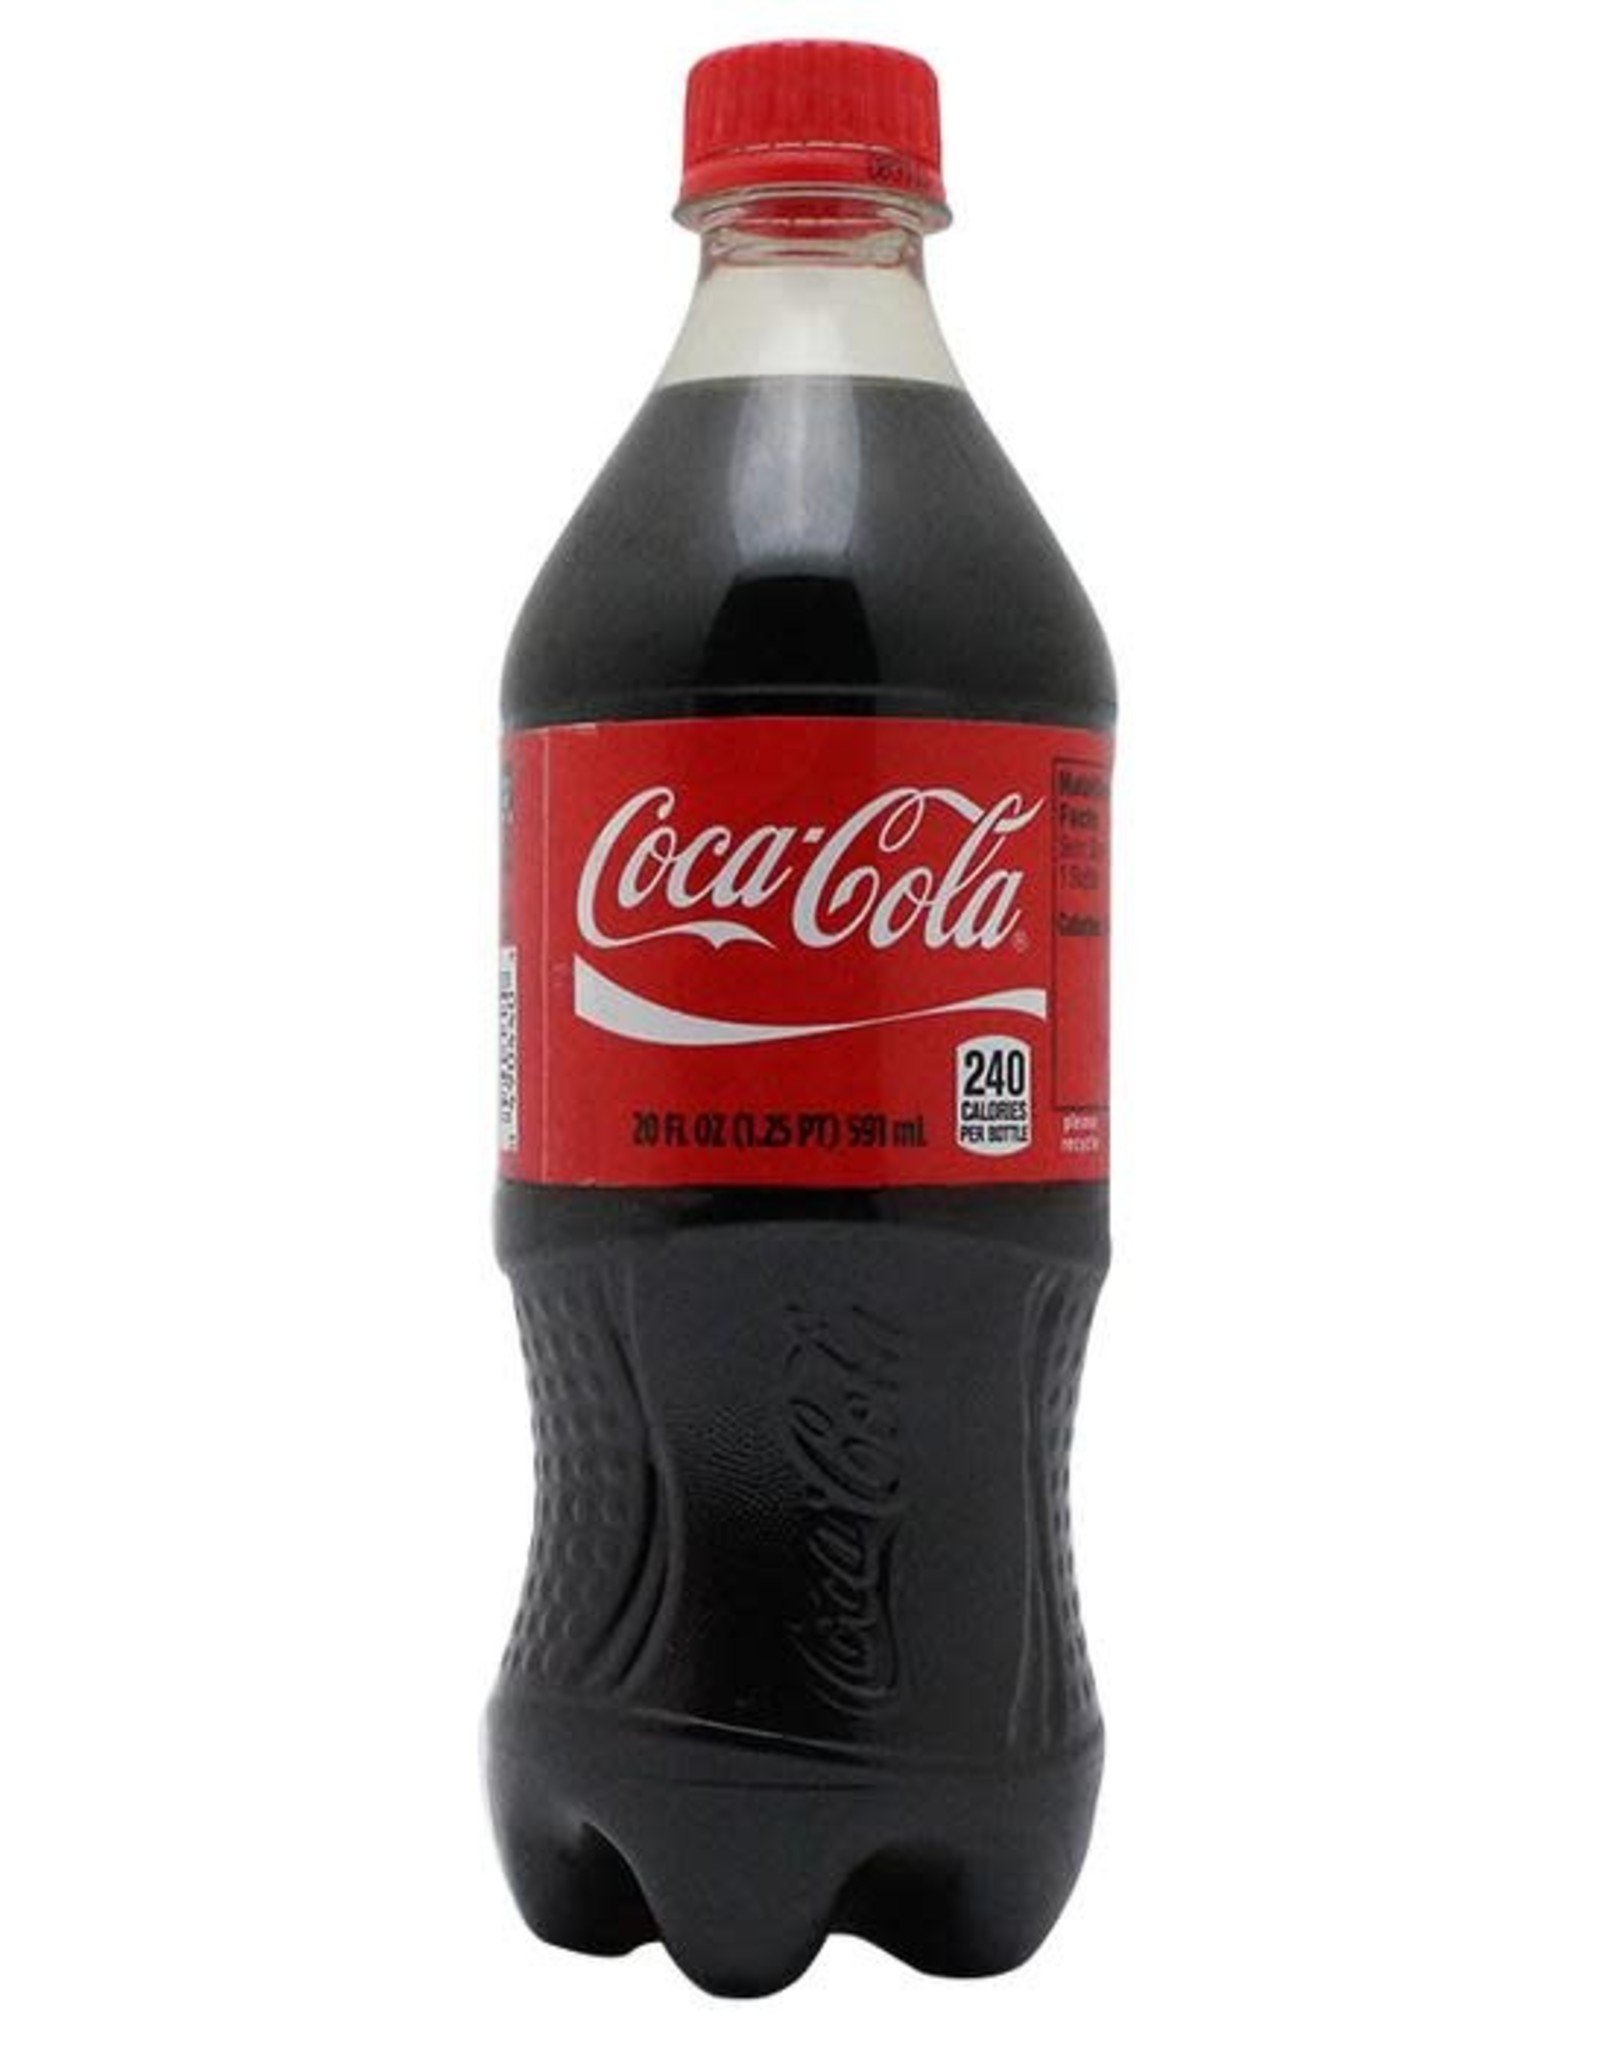 soda bottle images